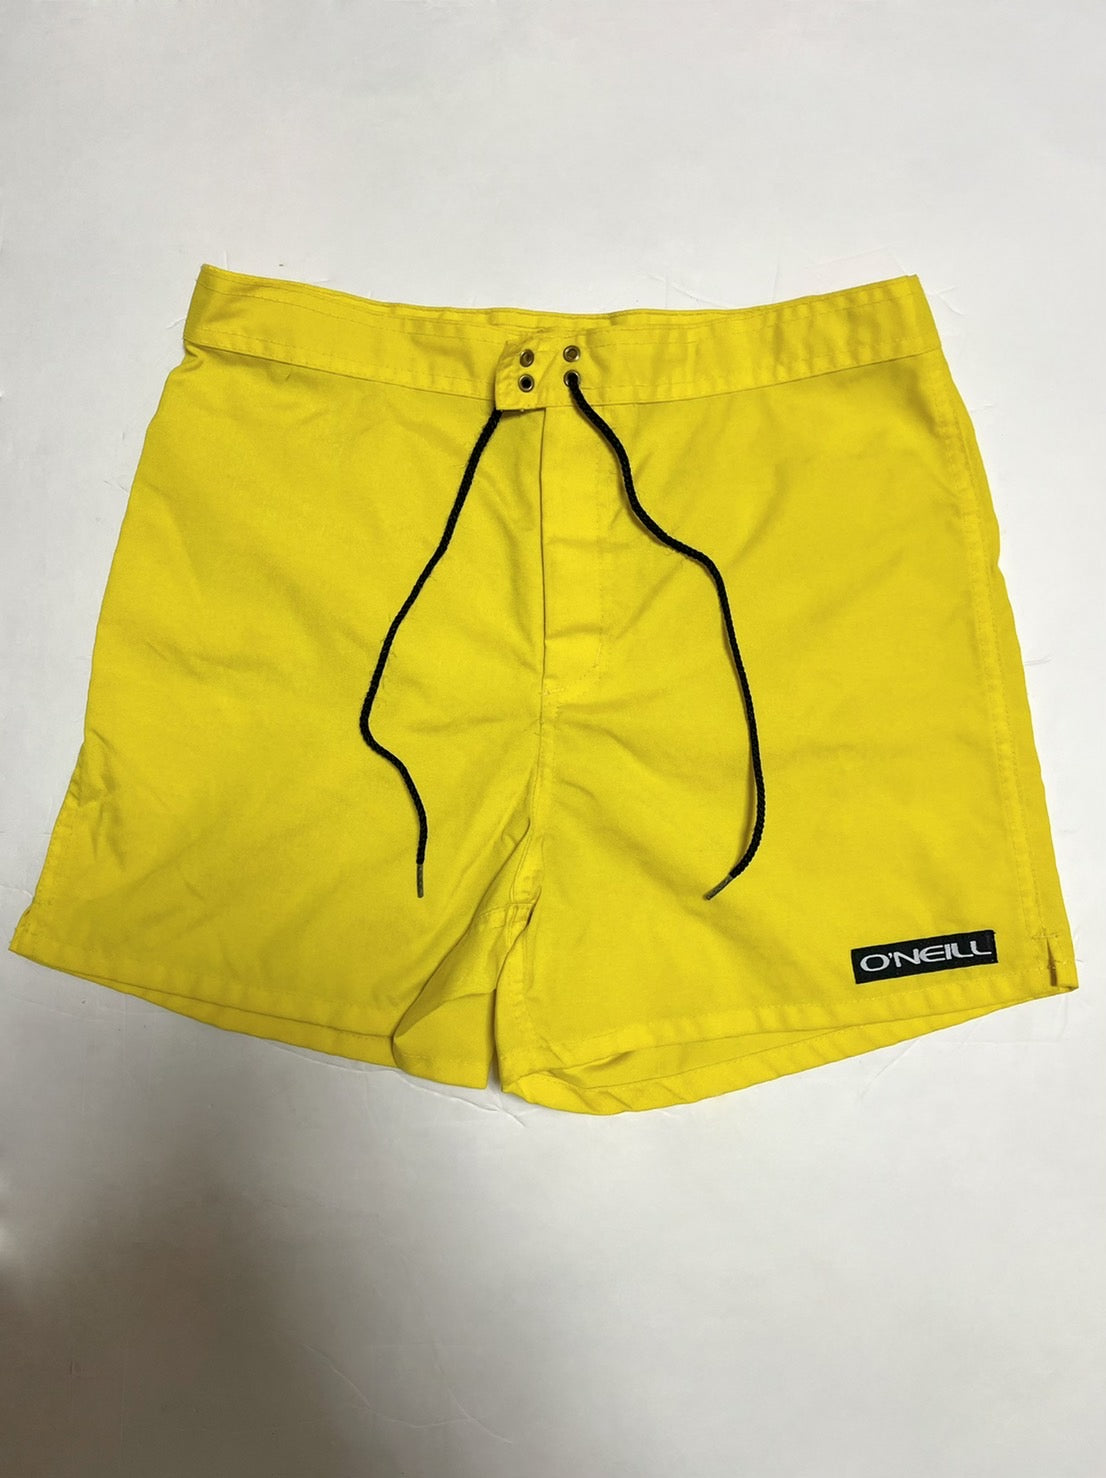 80s O'Neill board shorts USA made in USA size 30 オニール メンズ 水着 サーフパンツ ボー –  sup rising